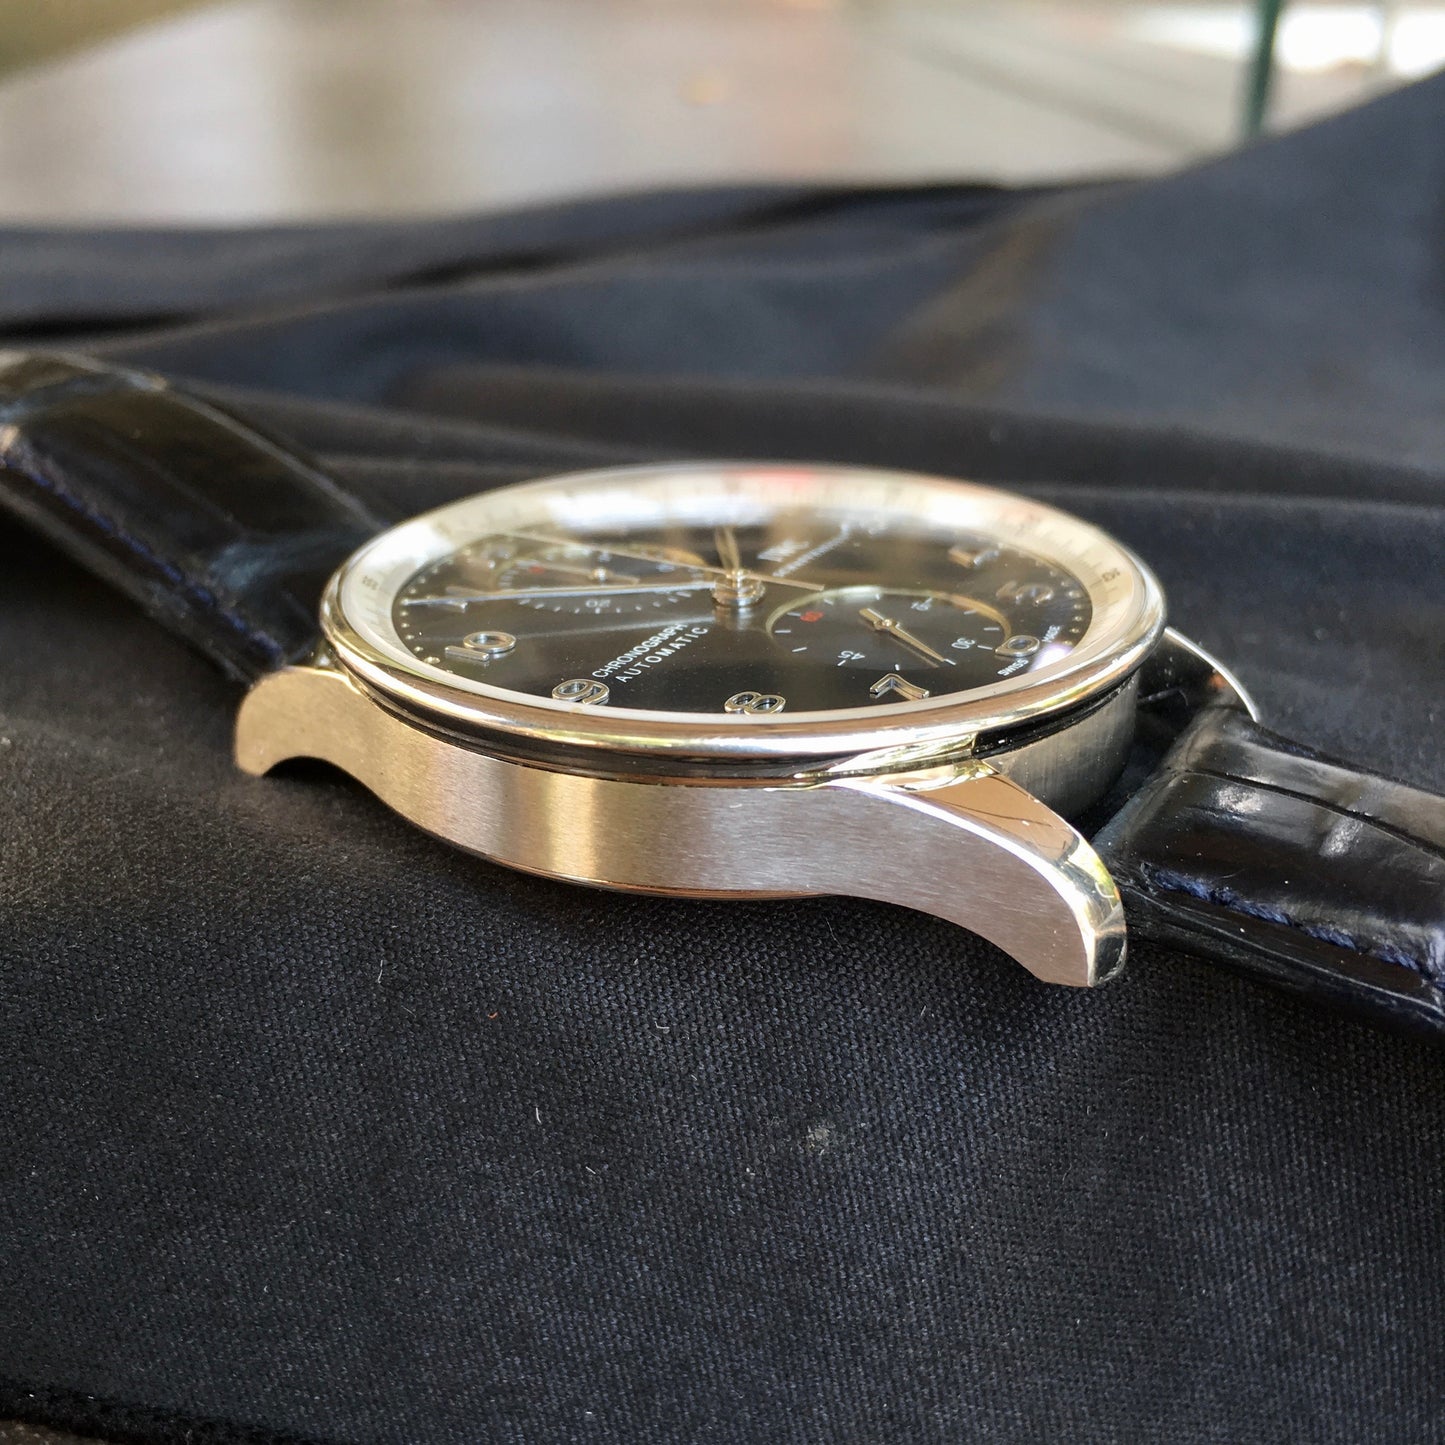 IWC Portuguese 371432 Chronograph Laureus Foundation Edition Automatic Wristwatch - Hashtag Watch Company